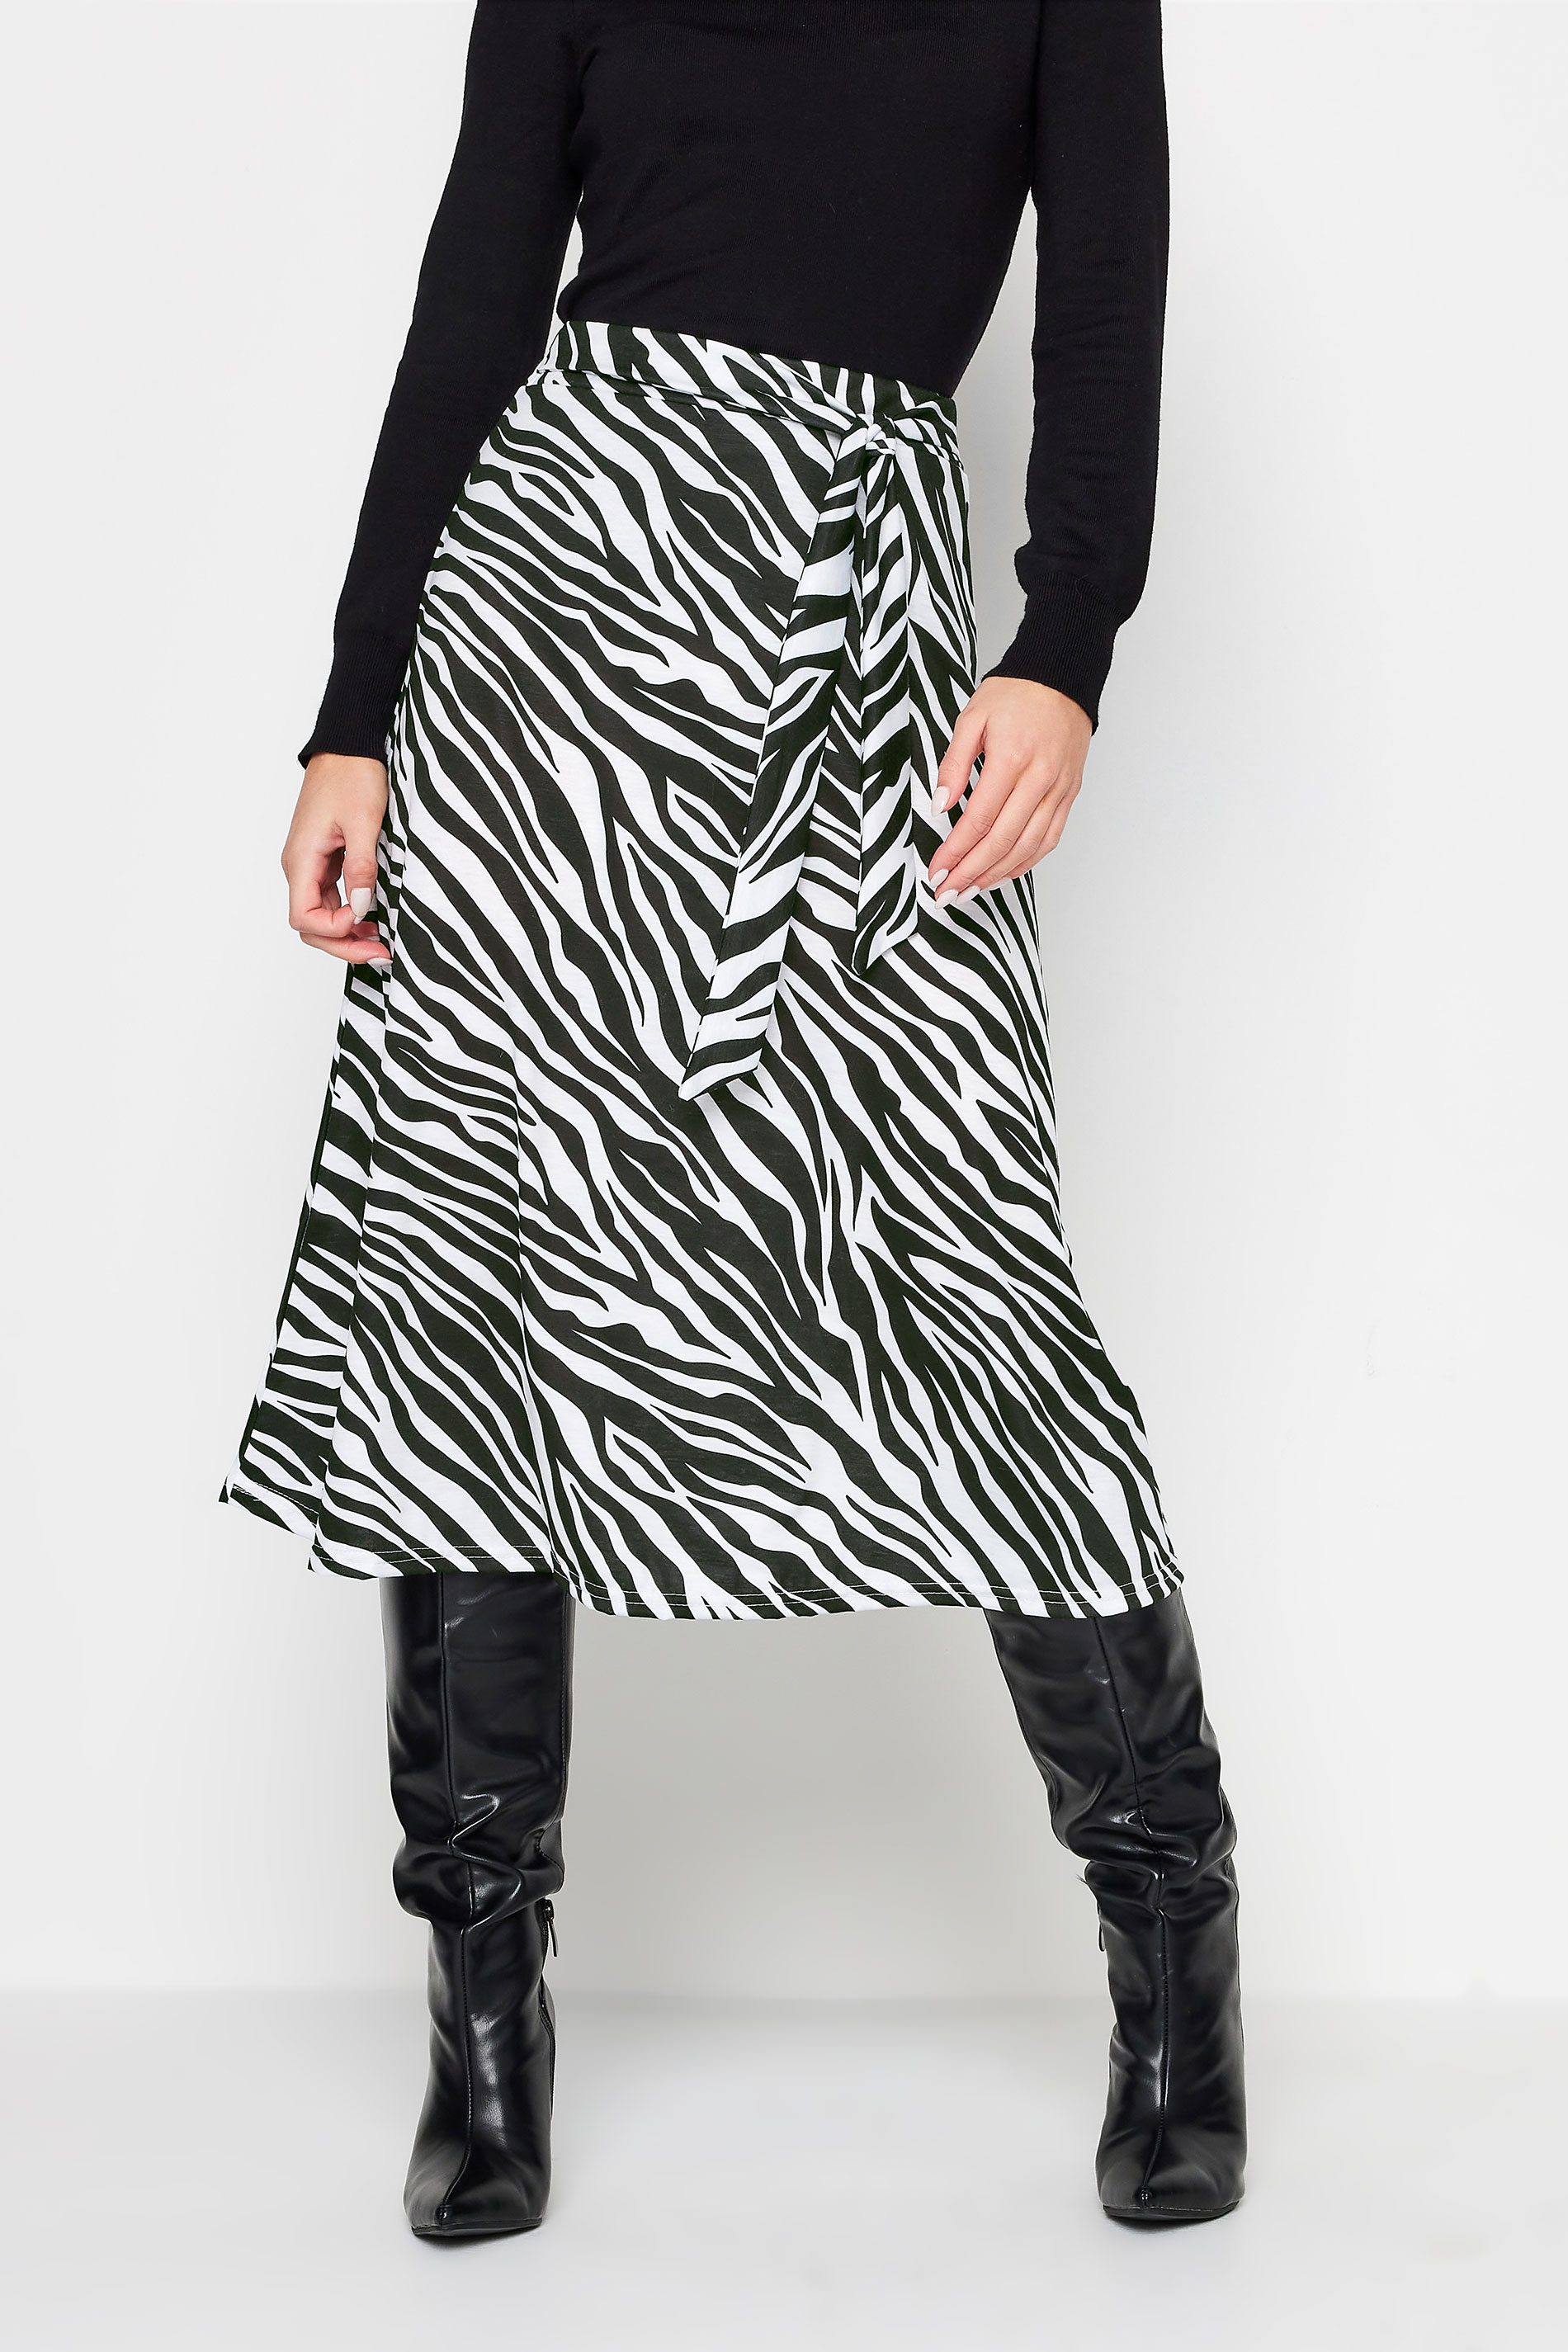 PixieGirl Black Zebra Print Tie Up Midi Skirt | PixieGirl 2